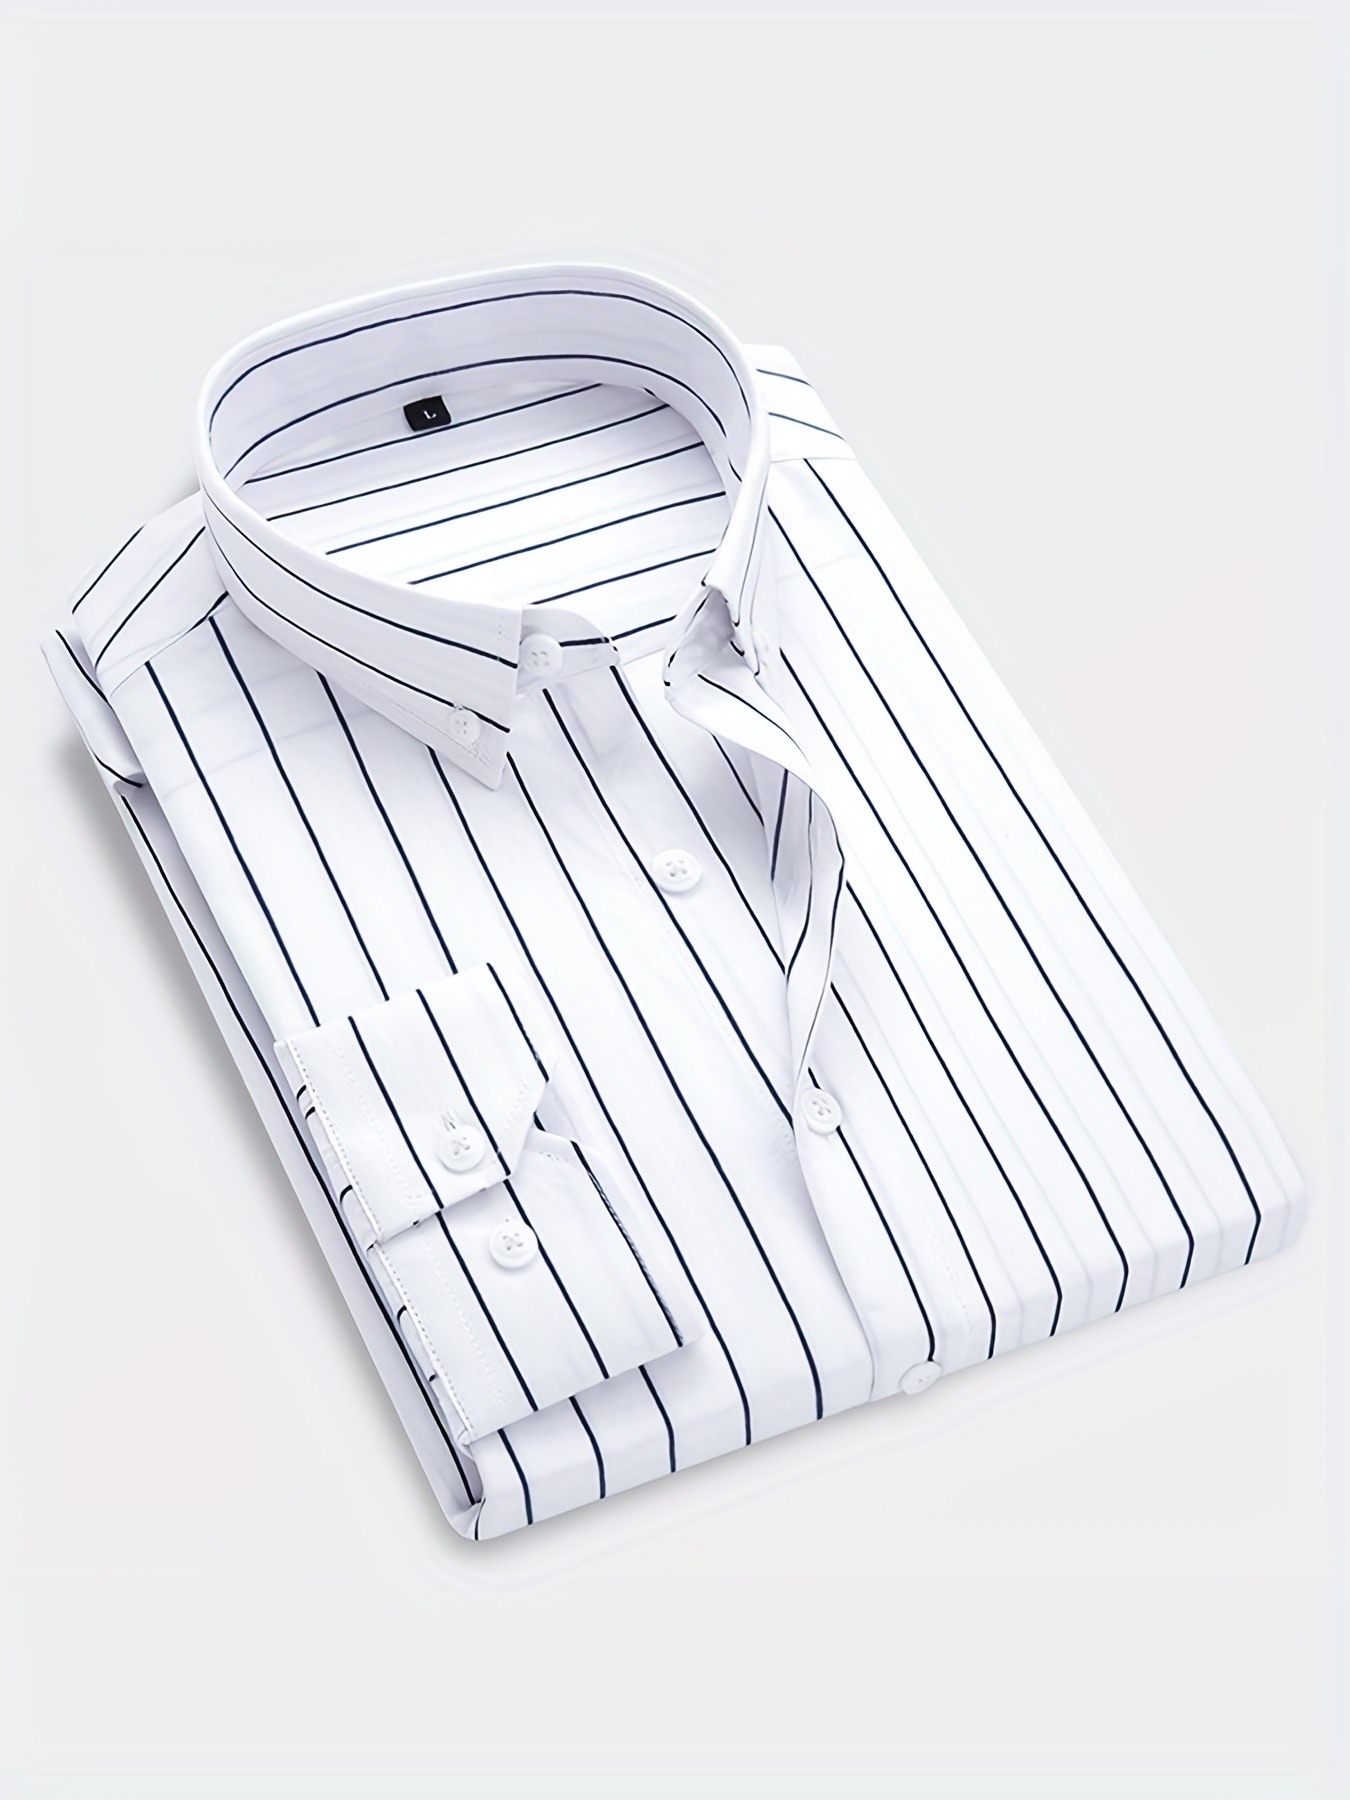 Horizontal Stripes for Men  Men fashion casual shirts, Men fashion casual  outfits, Men casual